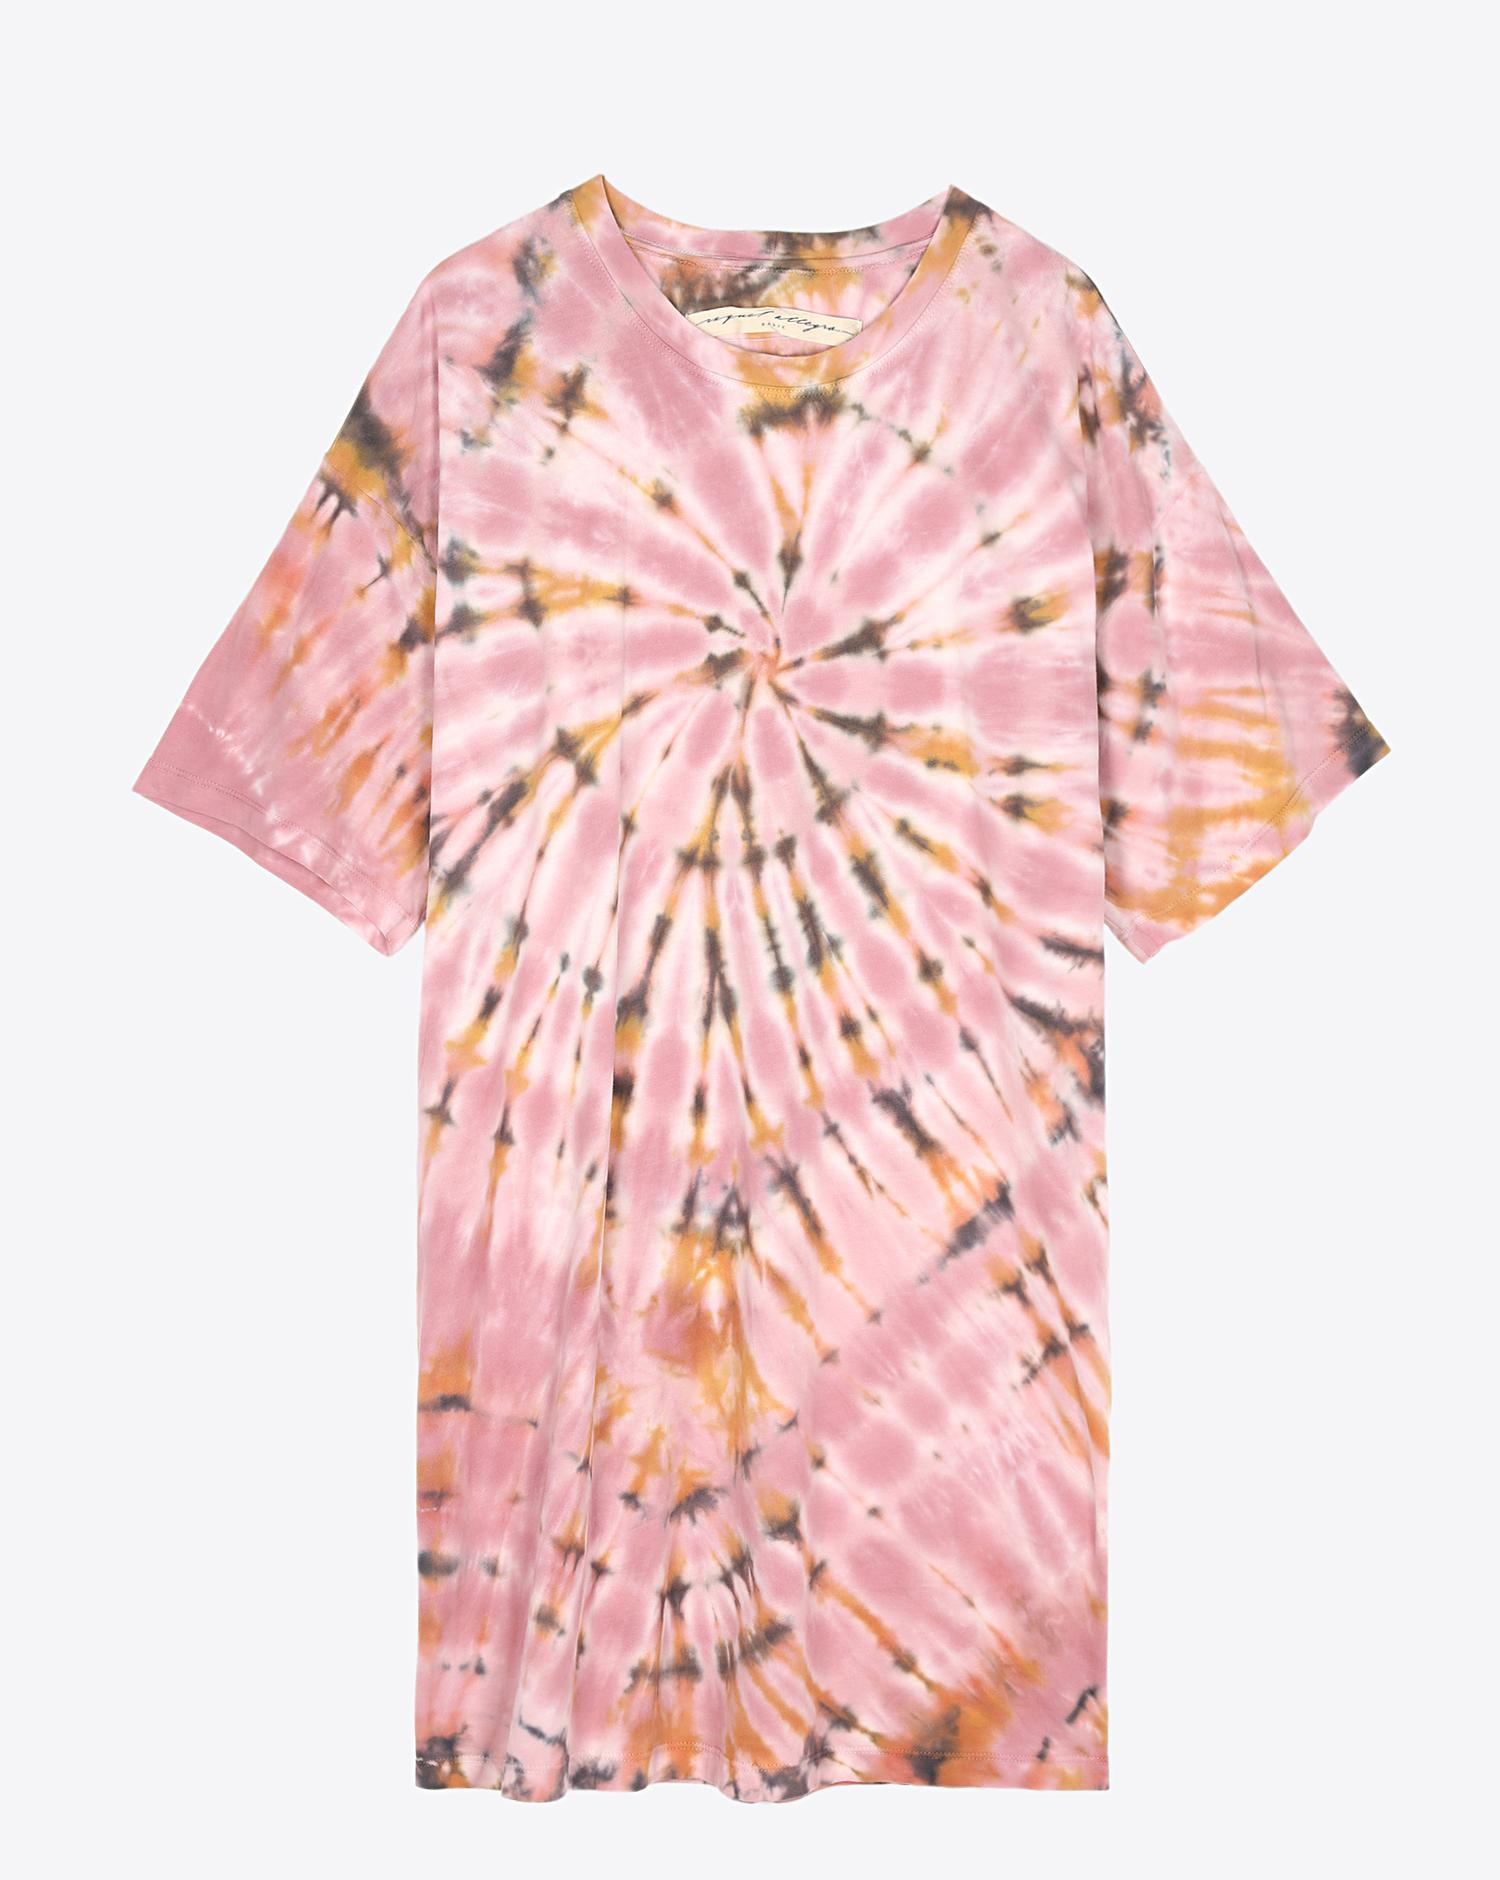 Raquel Allegra Pré-Collection T Shirt Dress - Pink Eclipse   